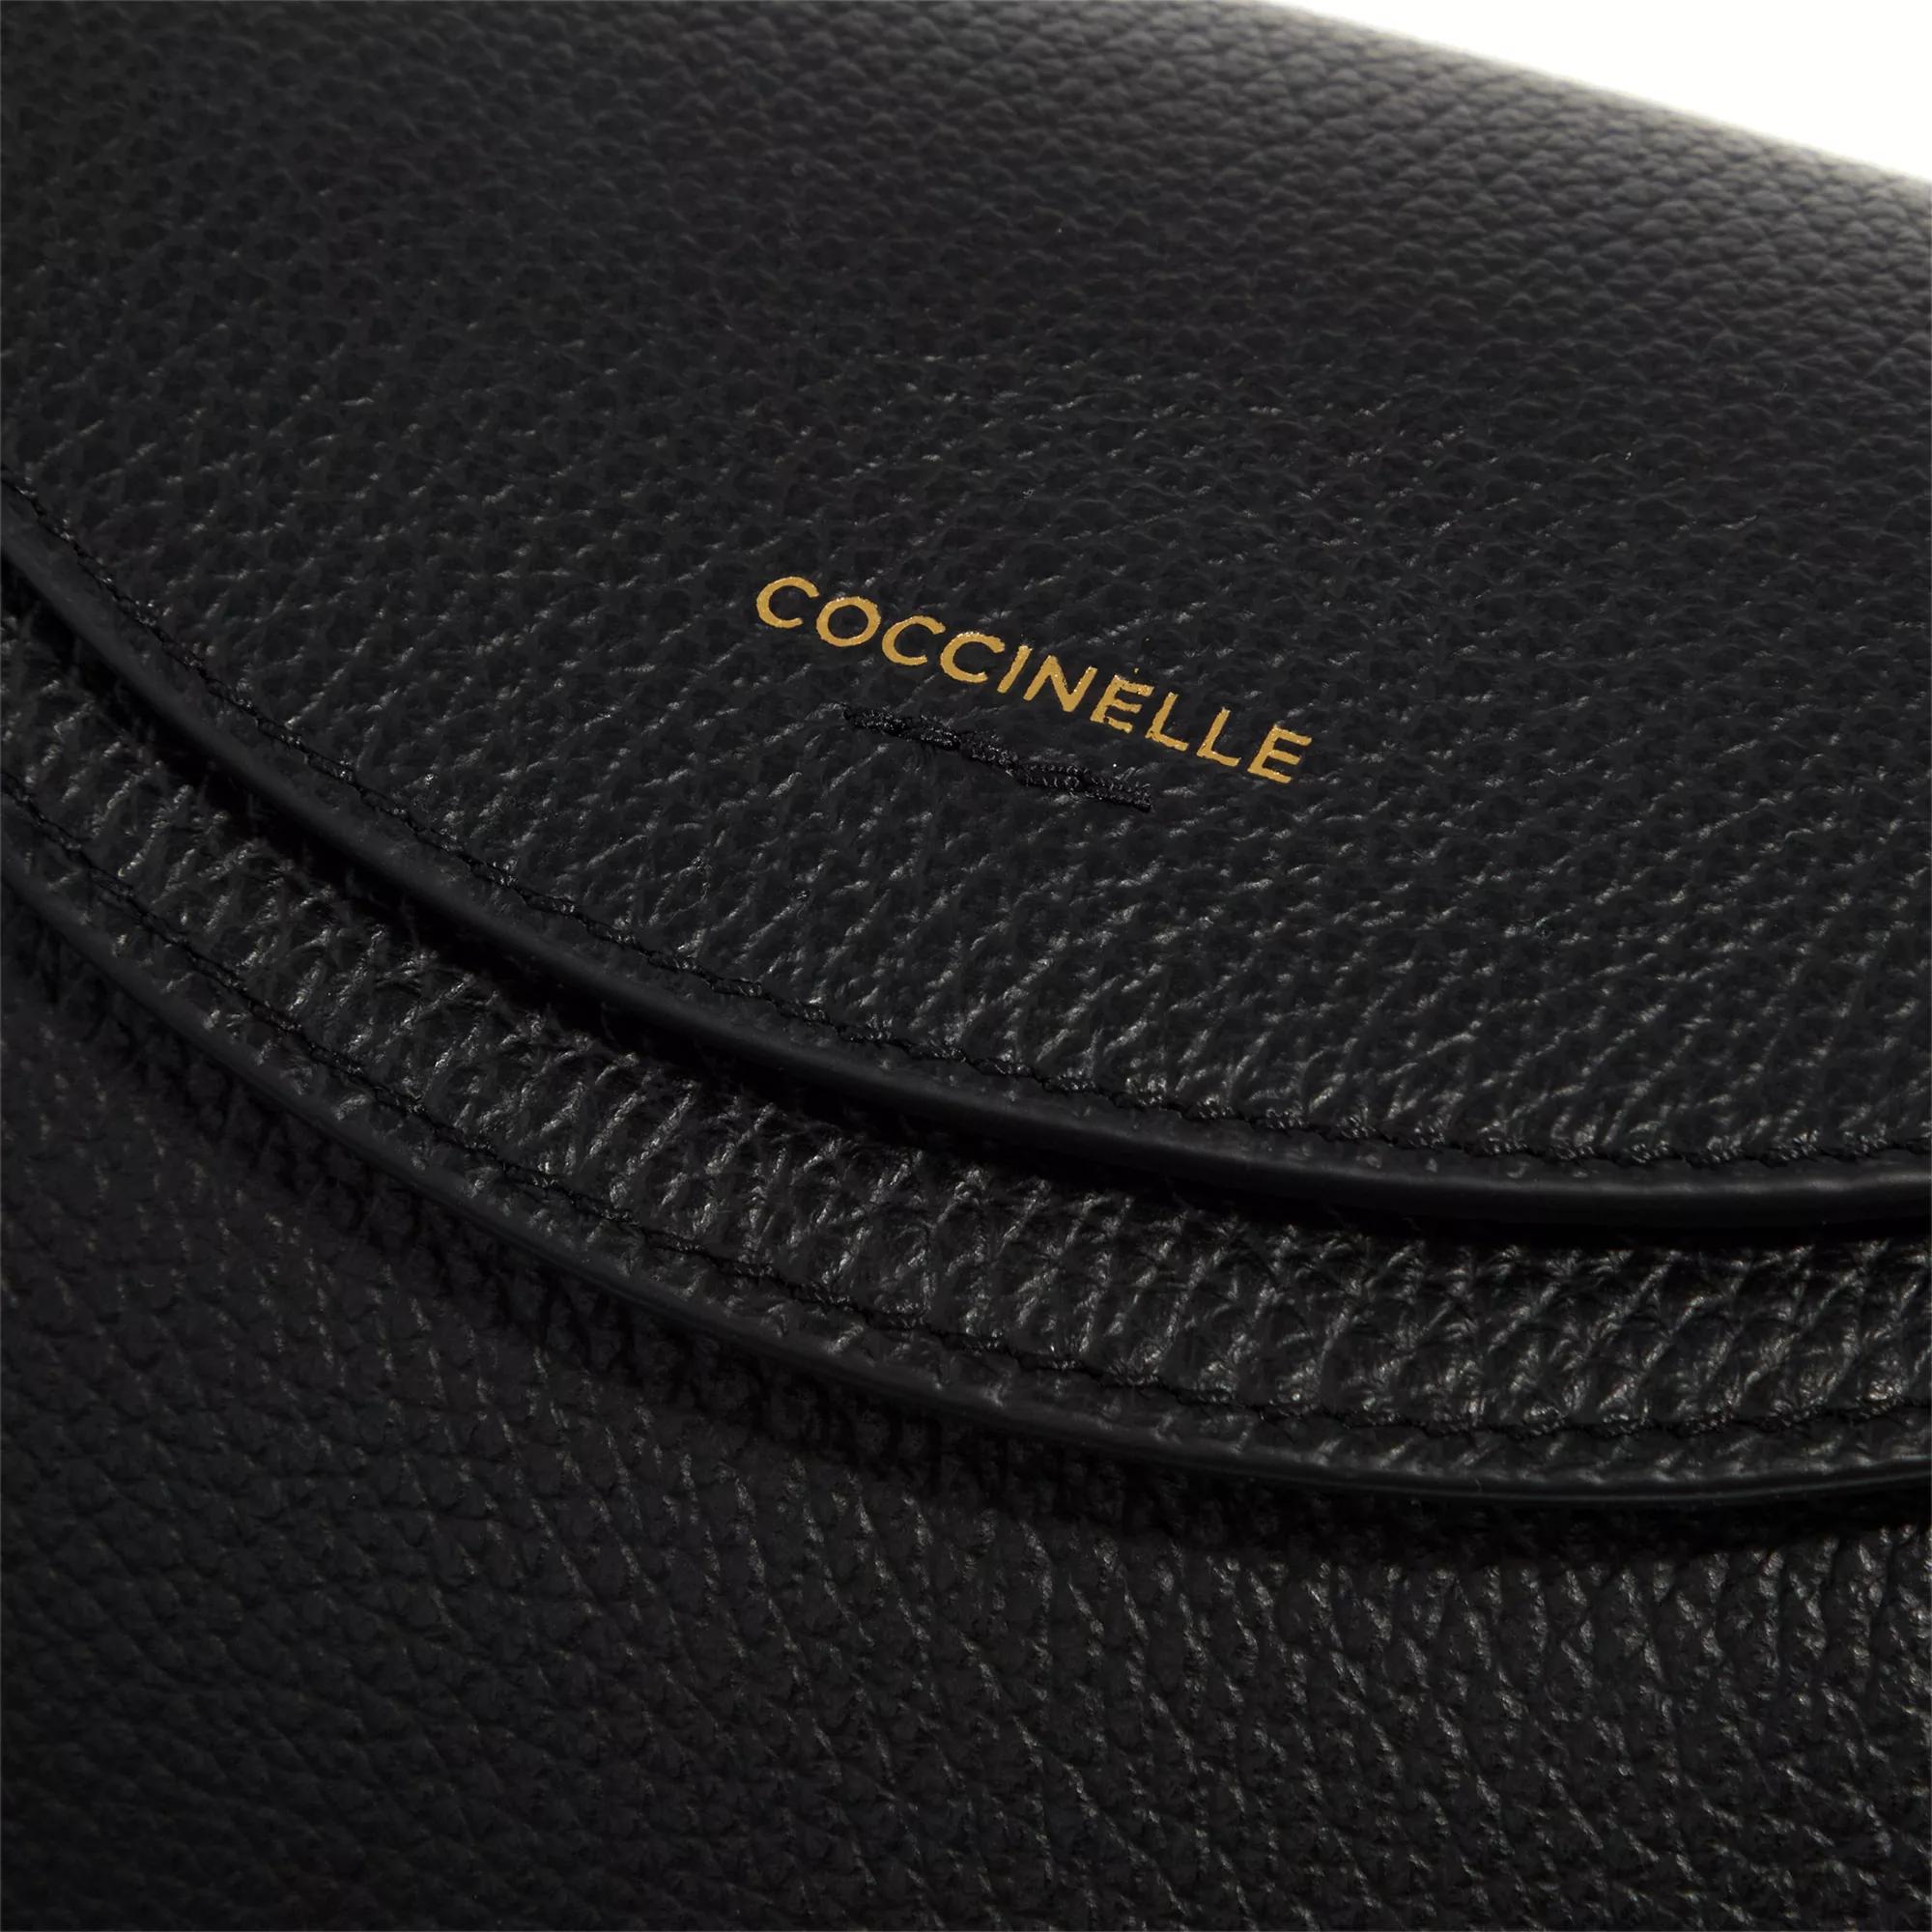 Coccinelle Satchels Eclyps Handbag in zwart